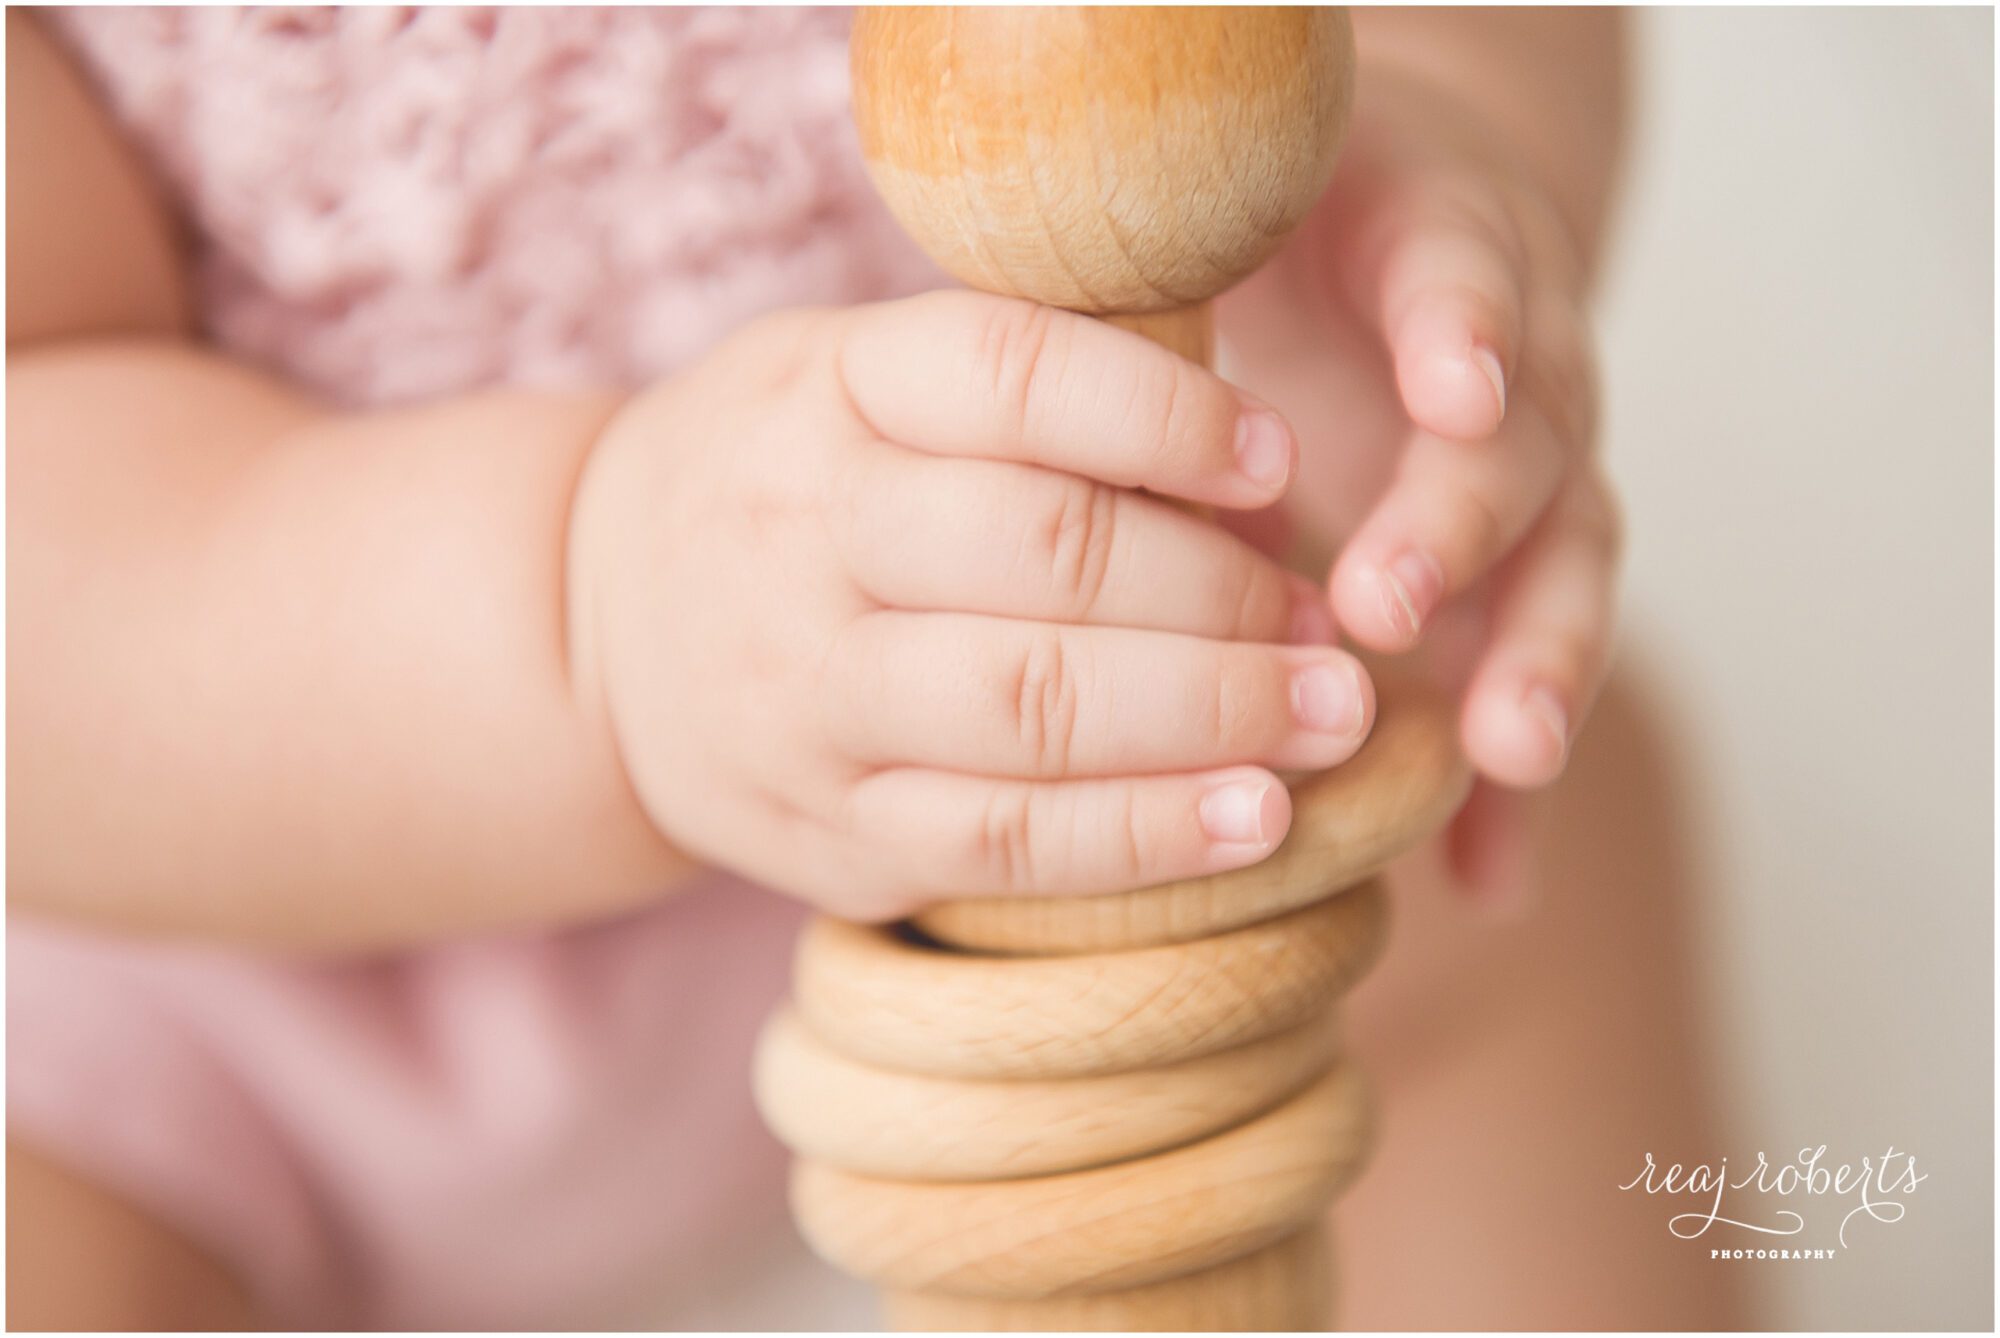 Baby hands | Reaj Roberts Photography